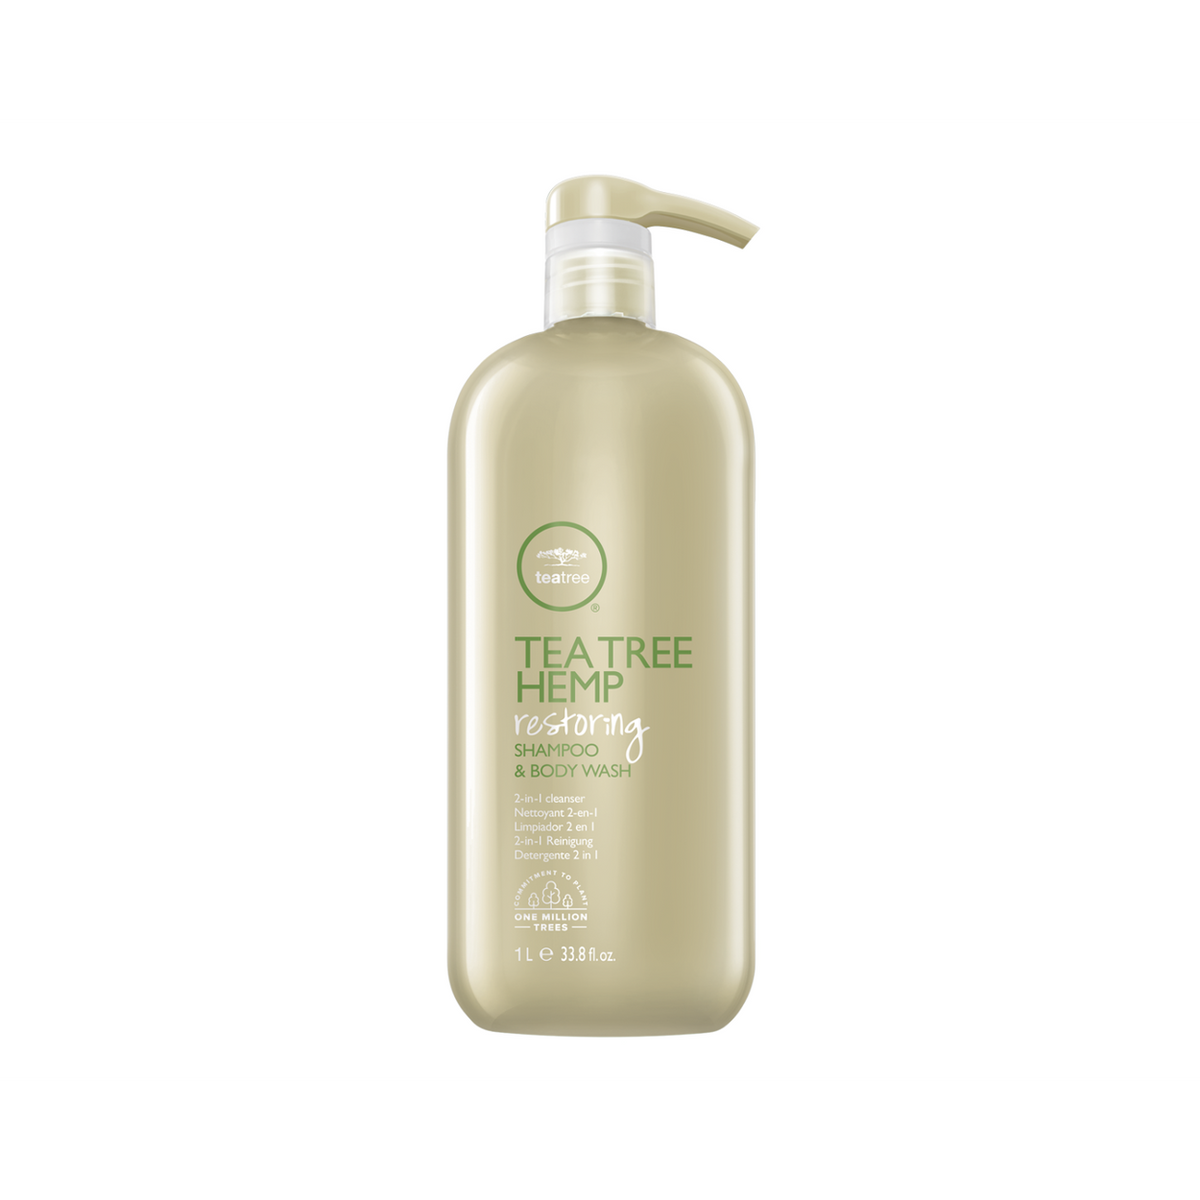 Tea Tree Hemp Restoring Shampoo & Body Wash - 1L - by Paul Mitchell |ProCare Outlet|